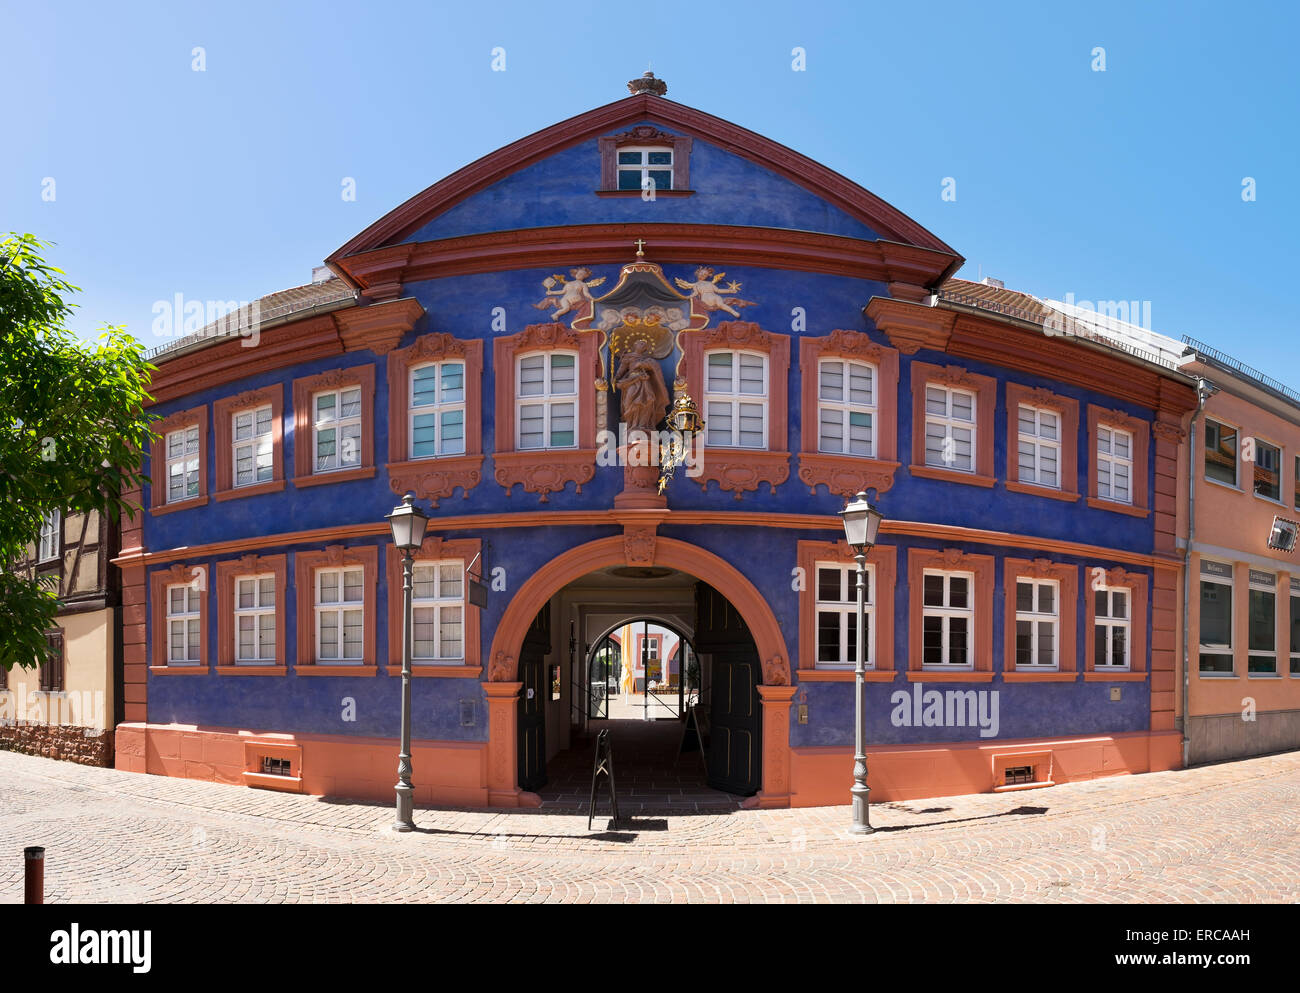 Franck House, Marktheidenfeld, Spessart, Mainfranken, Lower Franconia, Franconia, Bavaria, Germany Stock Photo